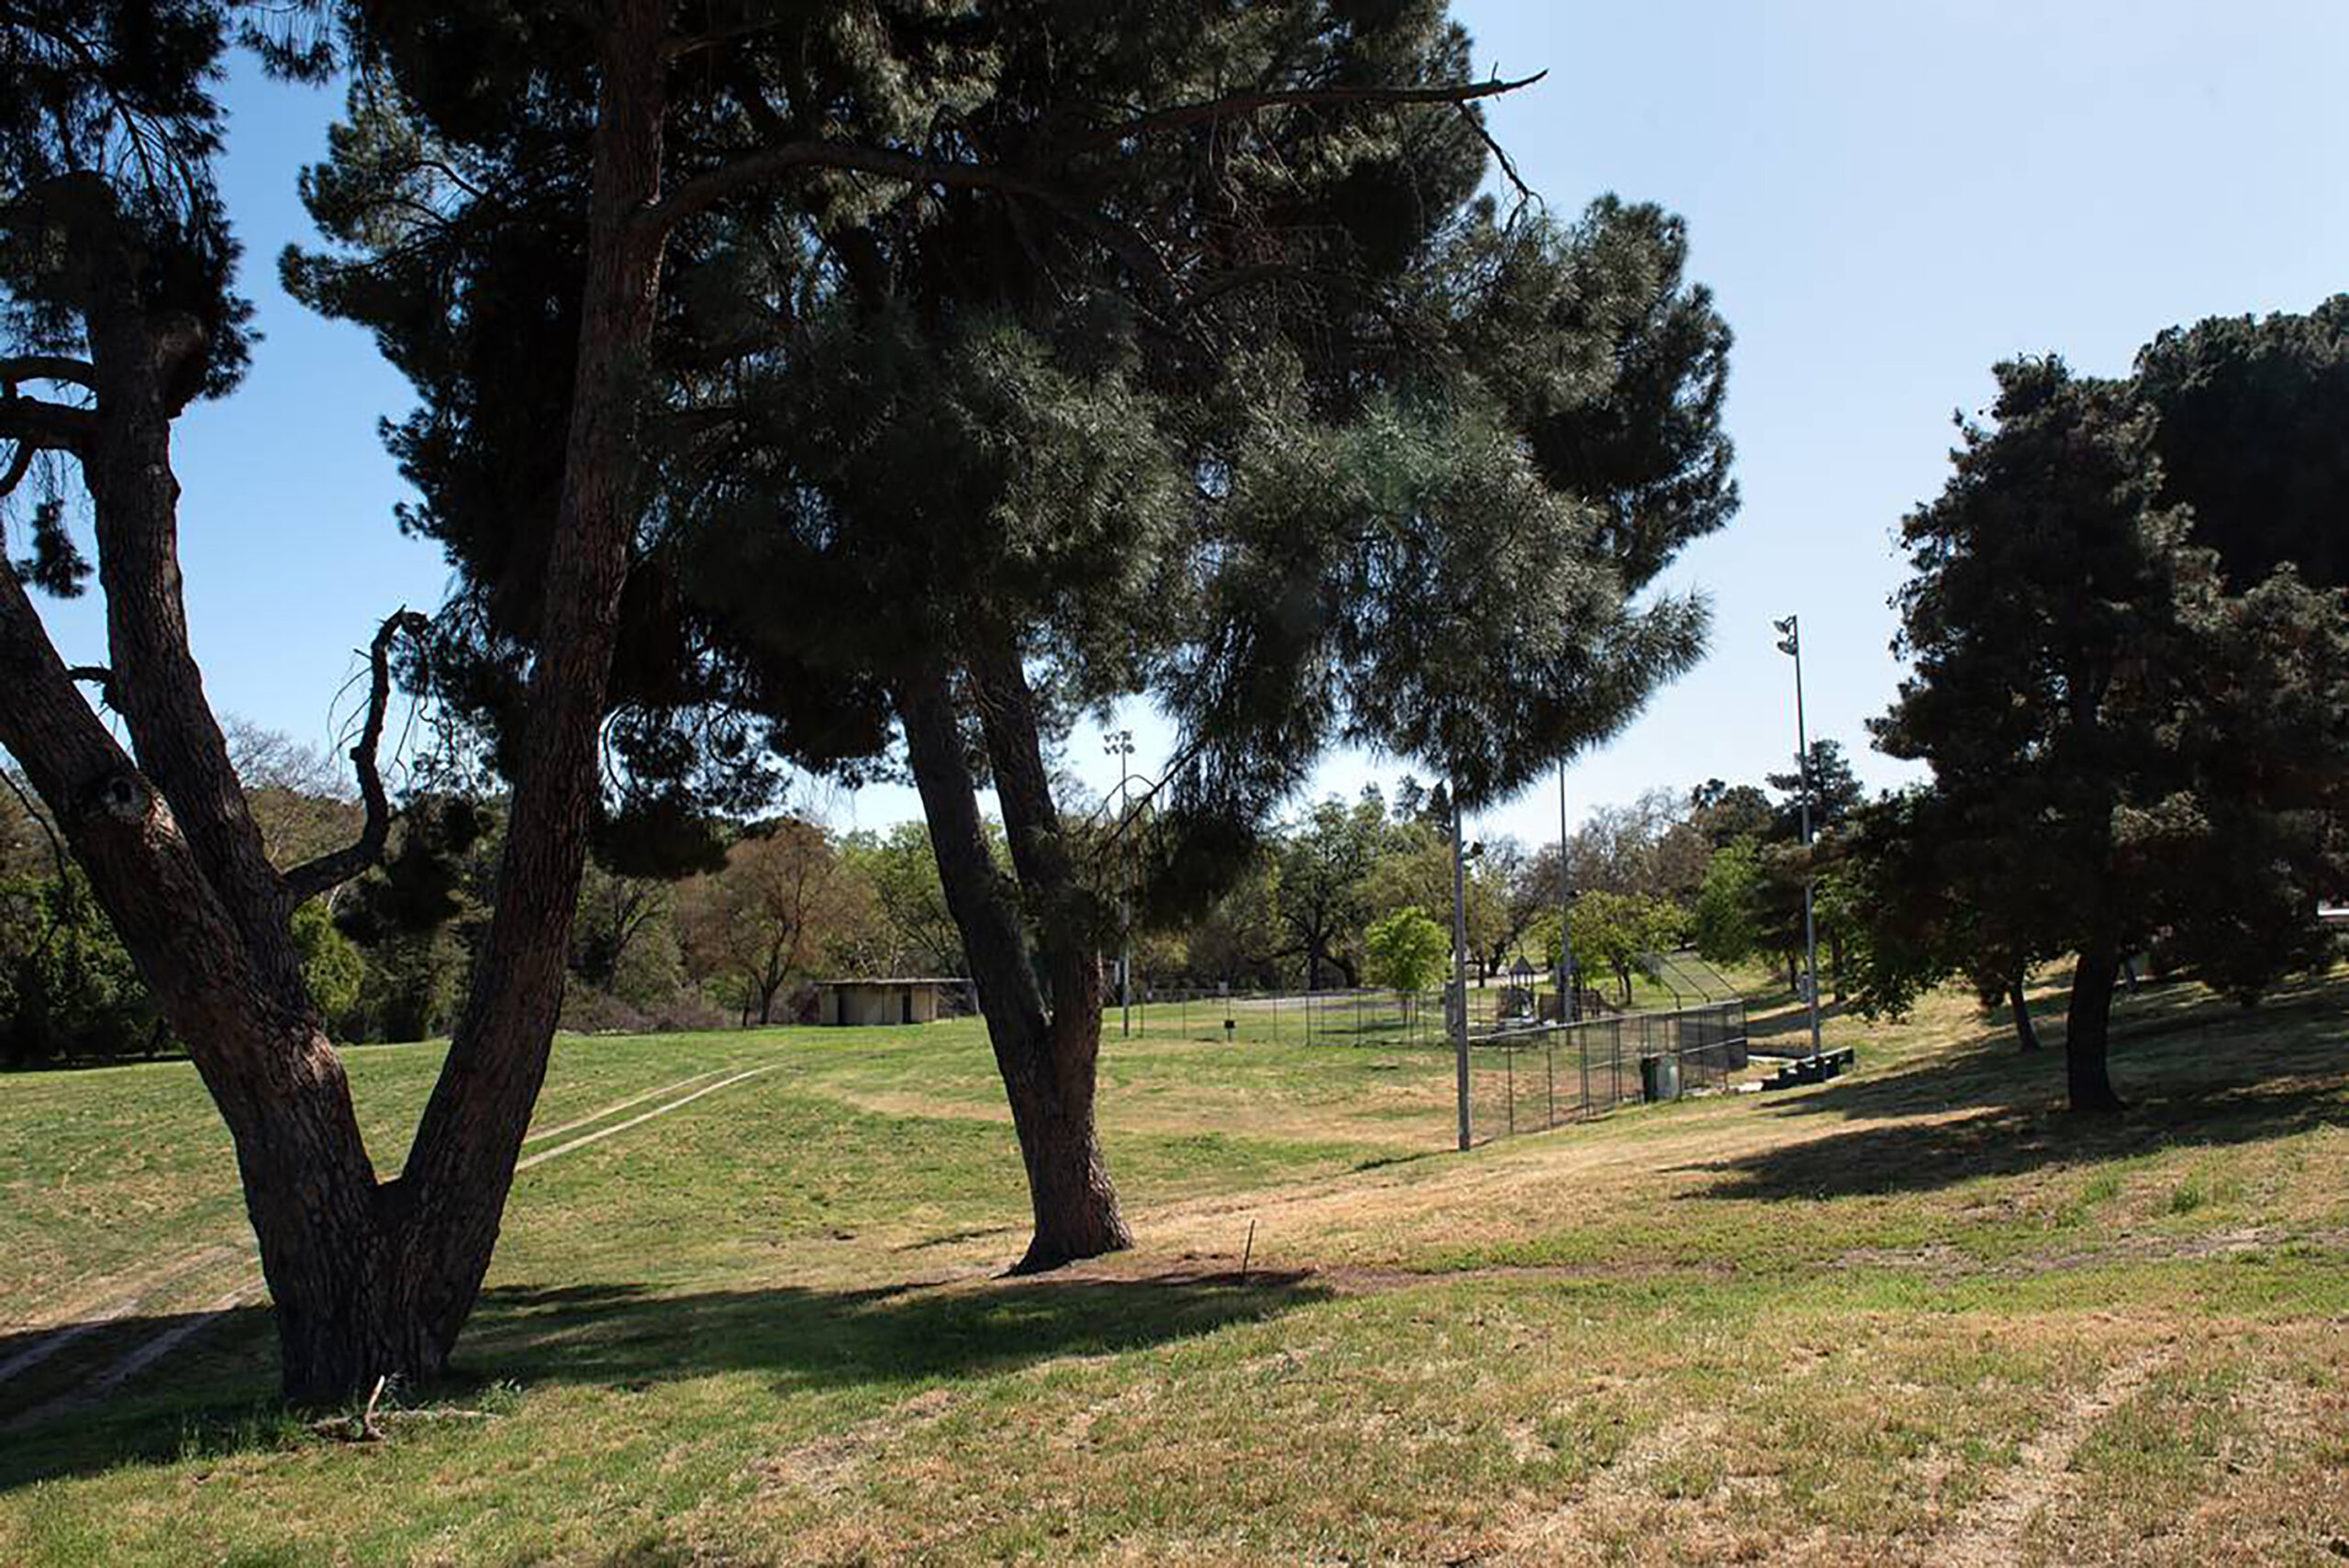 Landscaper accidentally kills homeless woman sleeping in California park.